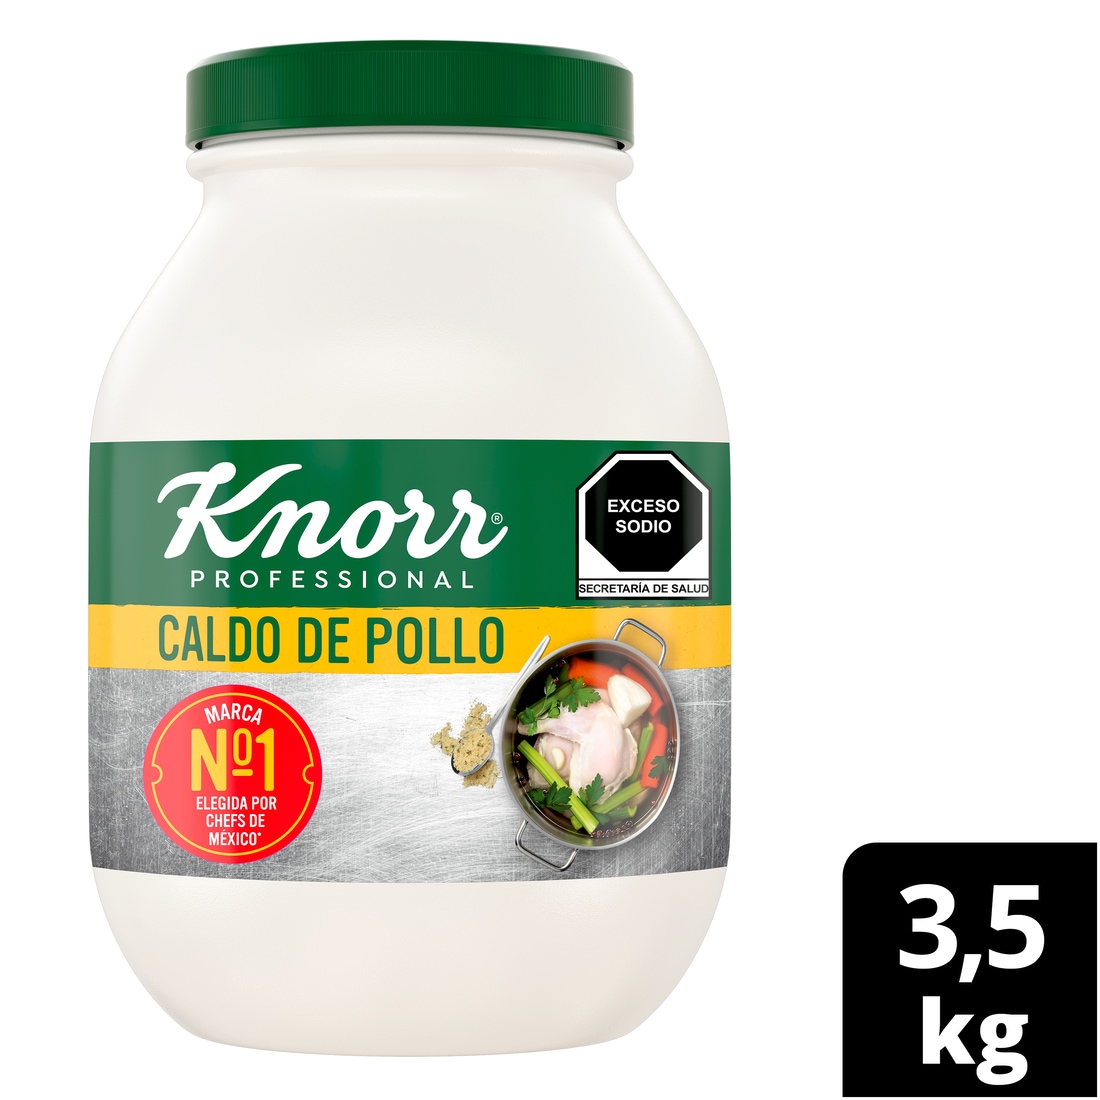 Knorr® Professional Caldo de Pollo 3,5 Kg